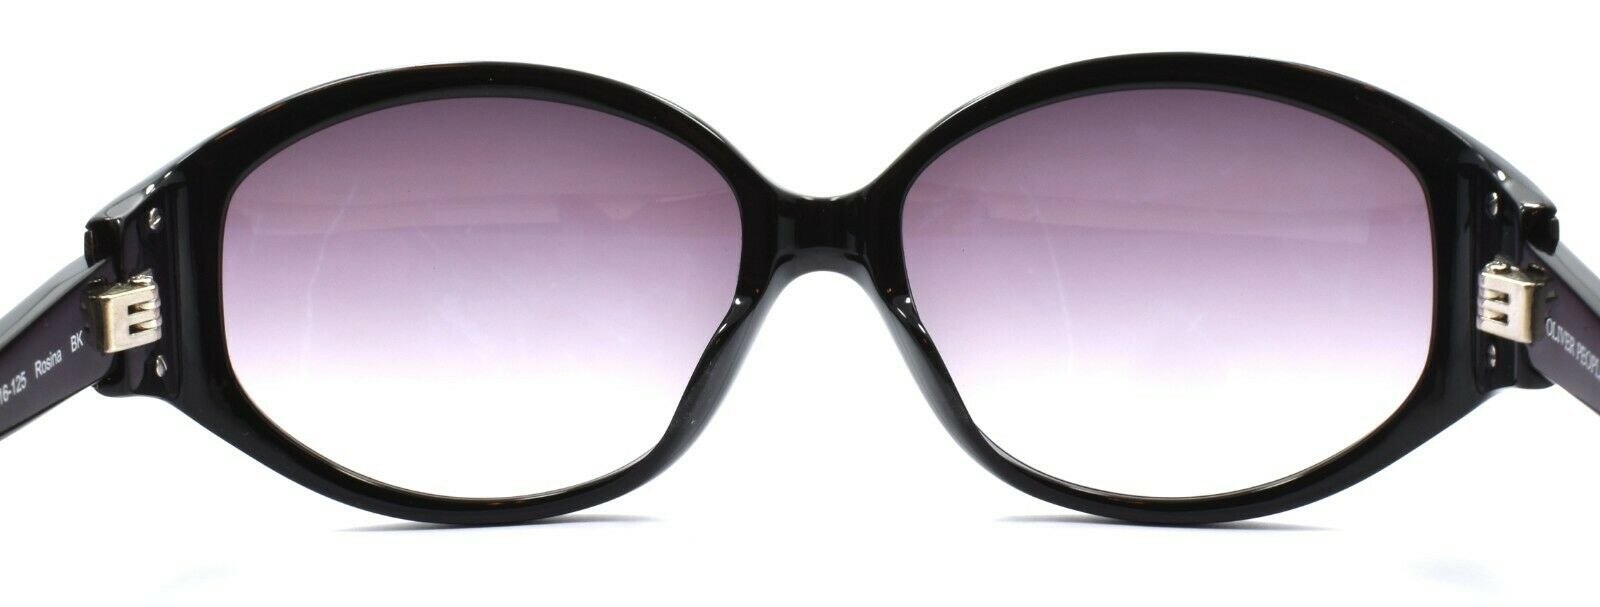 4-Oliver Peoples Rosina BK Women's Sunglasses Black / Smoke Gradient JAPAN-Does not apply-IKSpecs